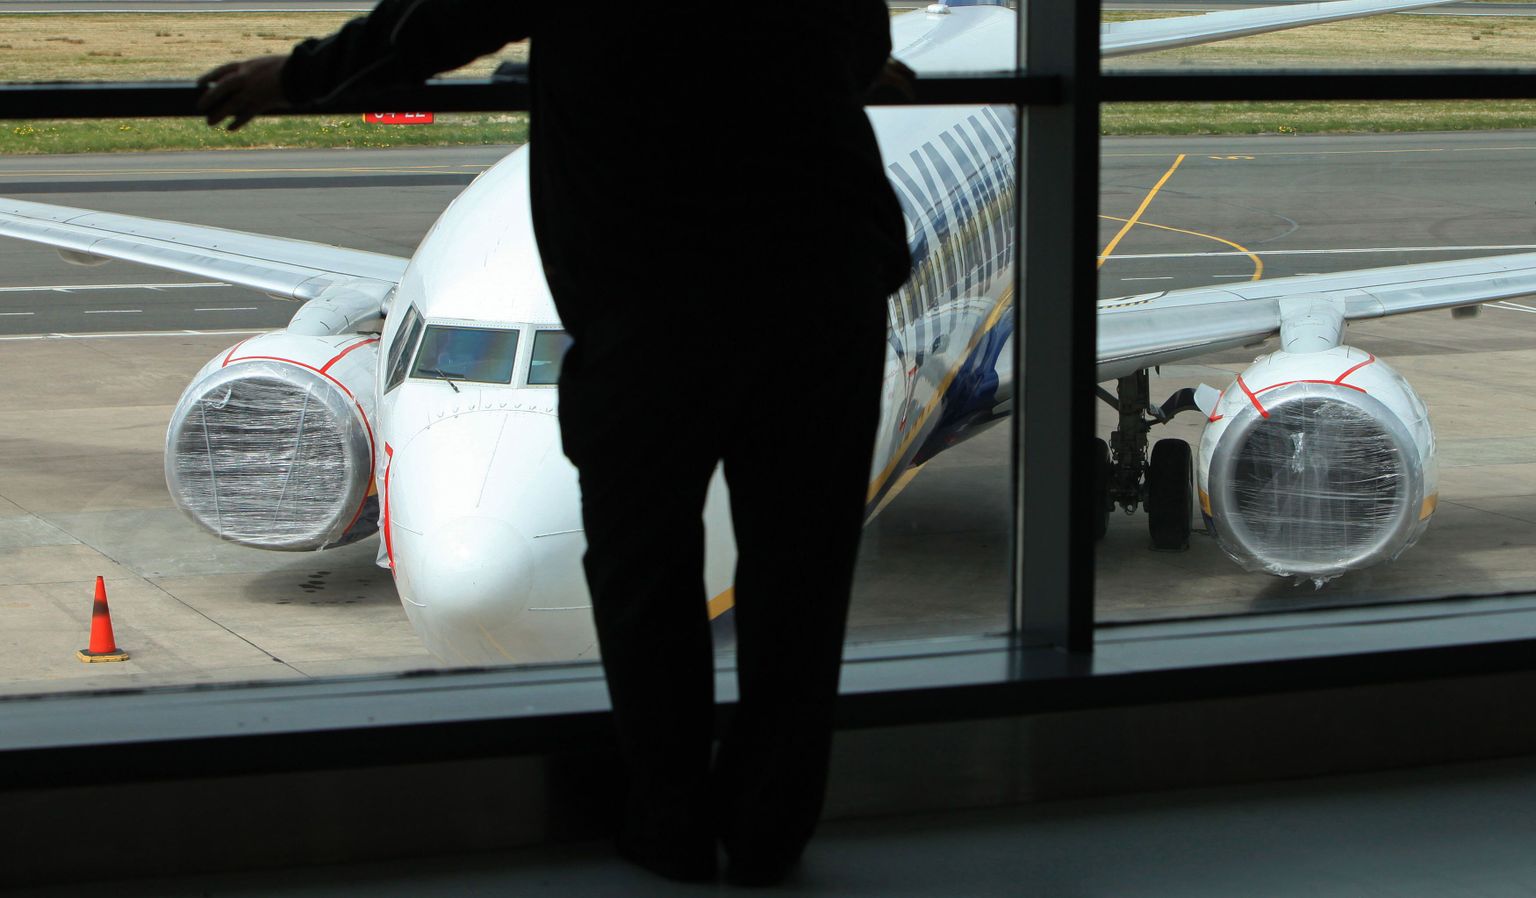 Ryanairi lennuk Belfast City lennuväljal 20. aprillil reisija silueti taustal.